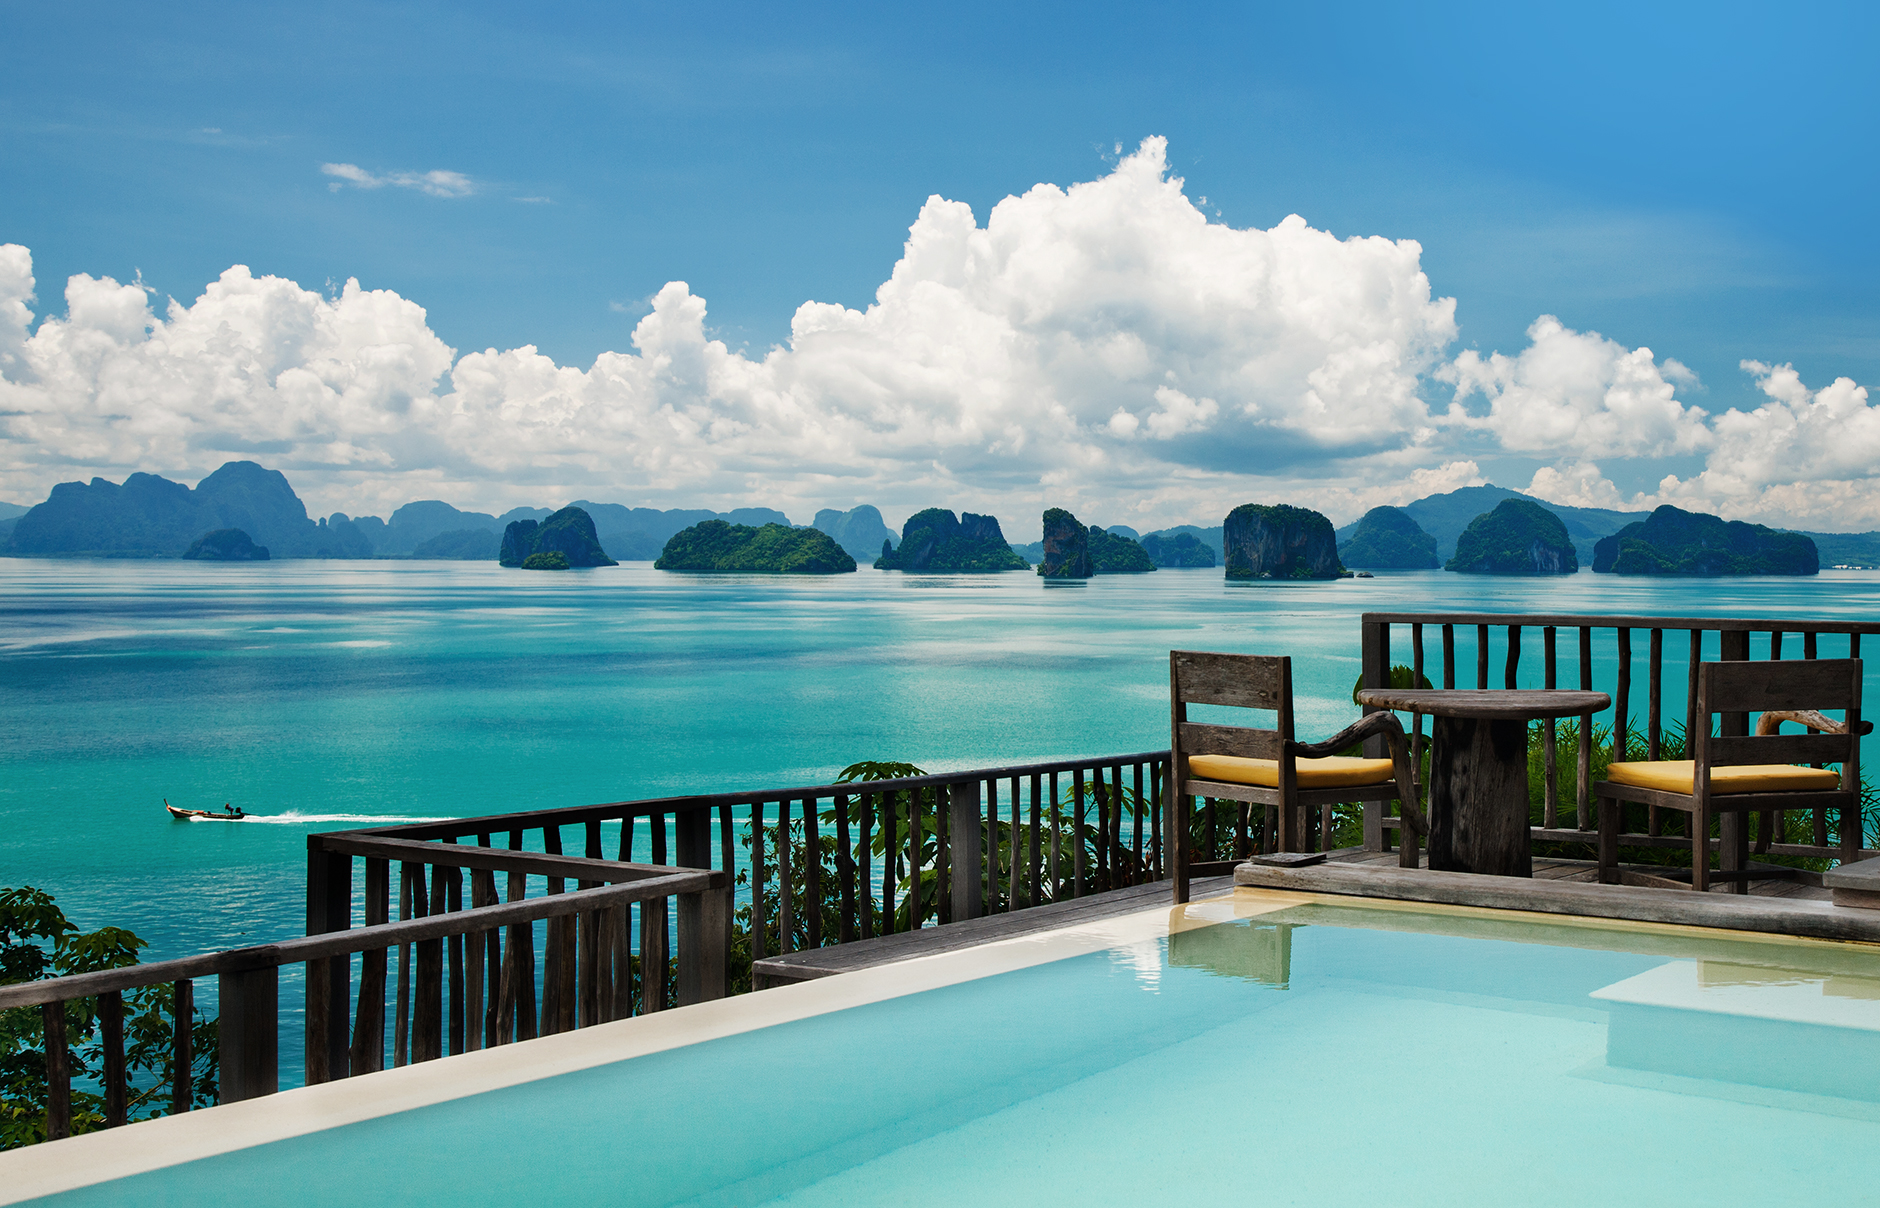 The best luxury beach hotels and resorts in Phuket